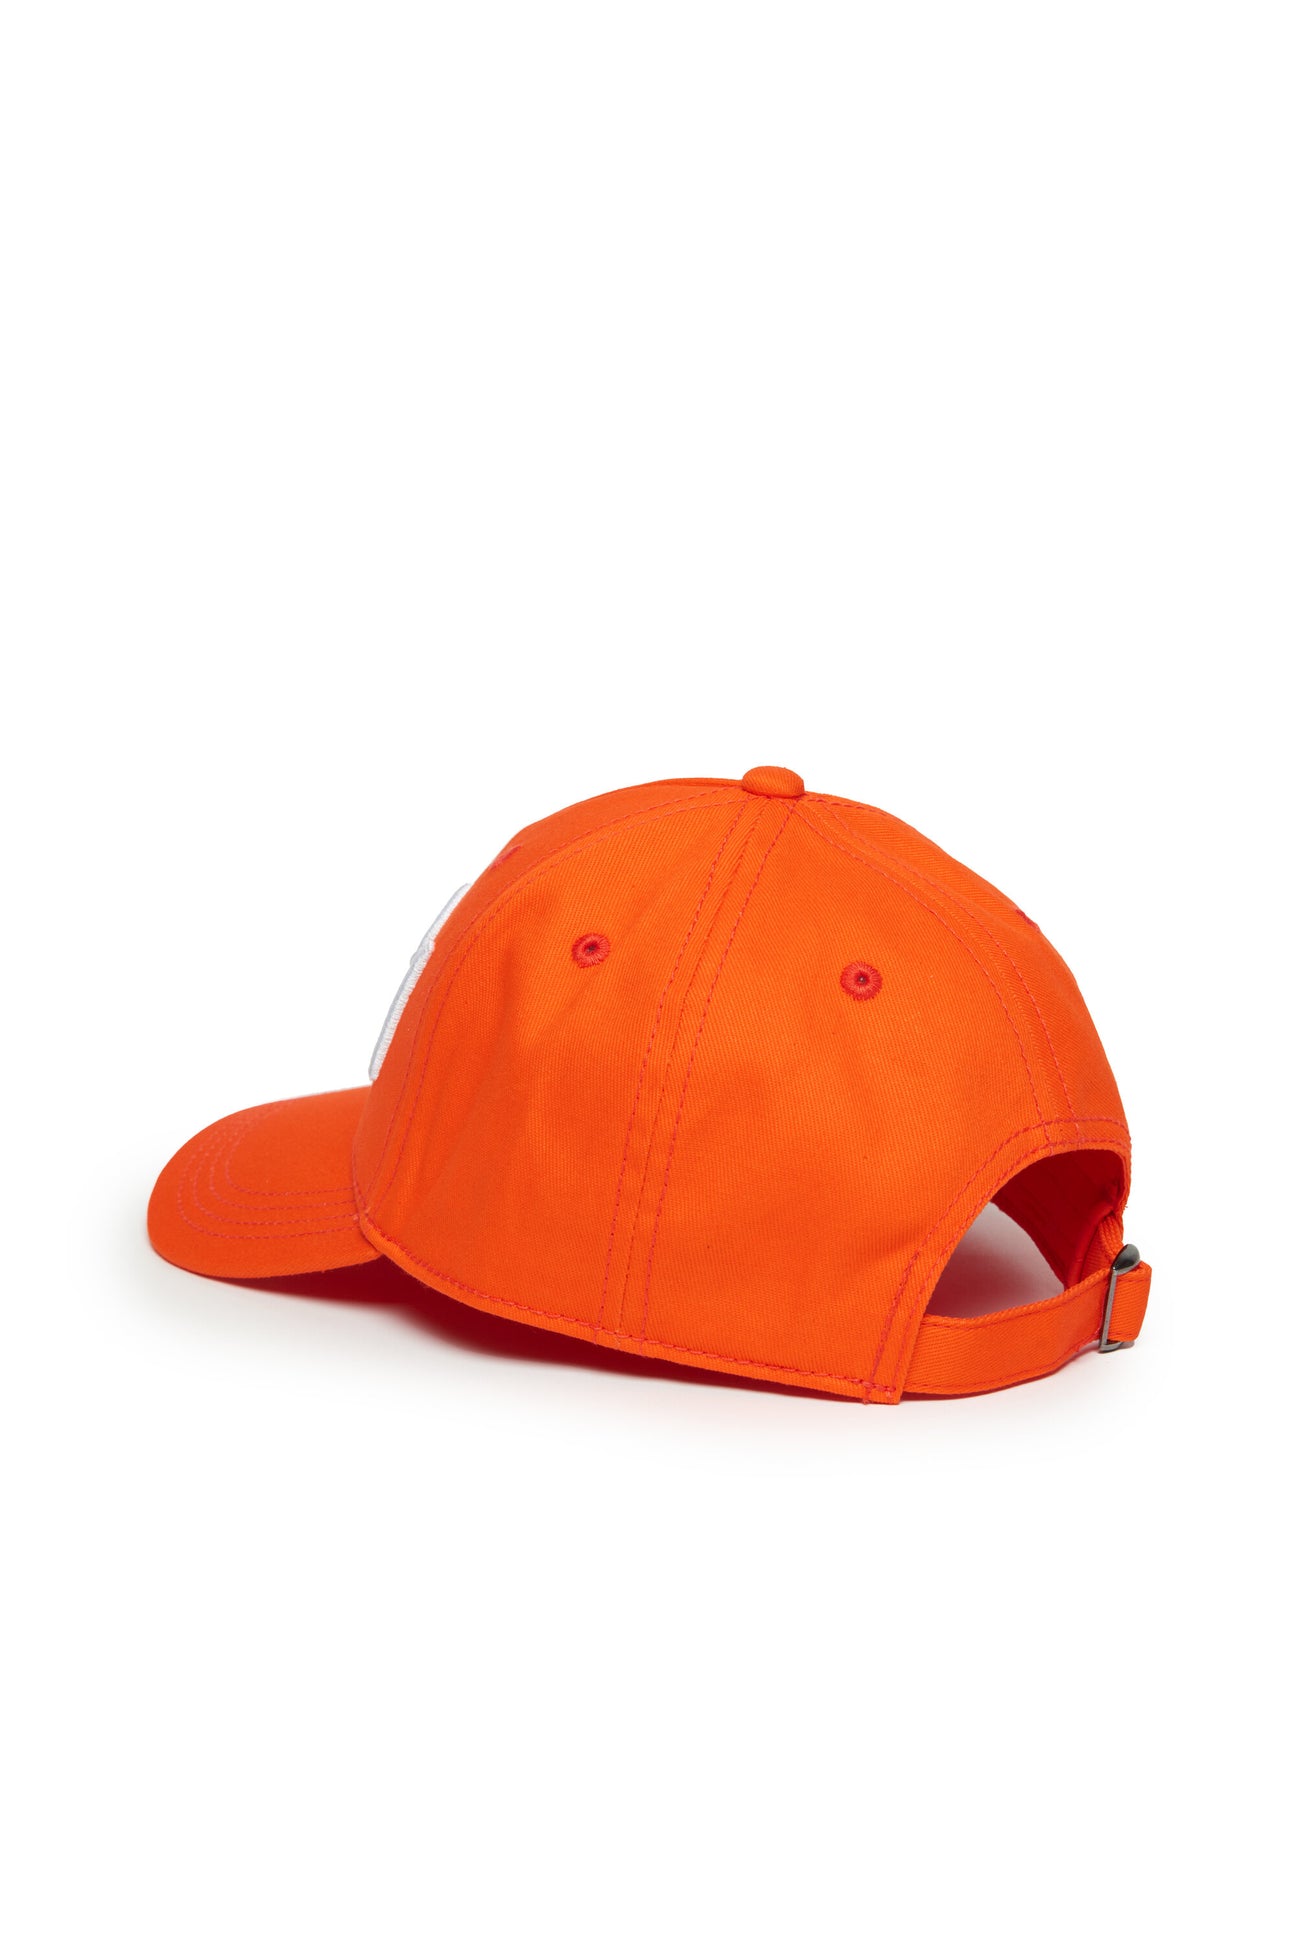 Gorra de béisbol de gabardina naranja fluorescente con logotipo Gorra de béisbol de gabardina naranja fluorescente con logotipo